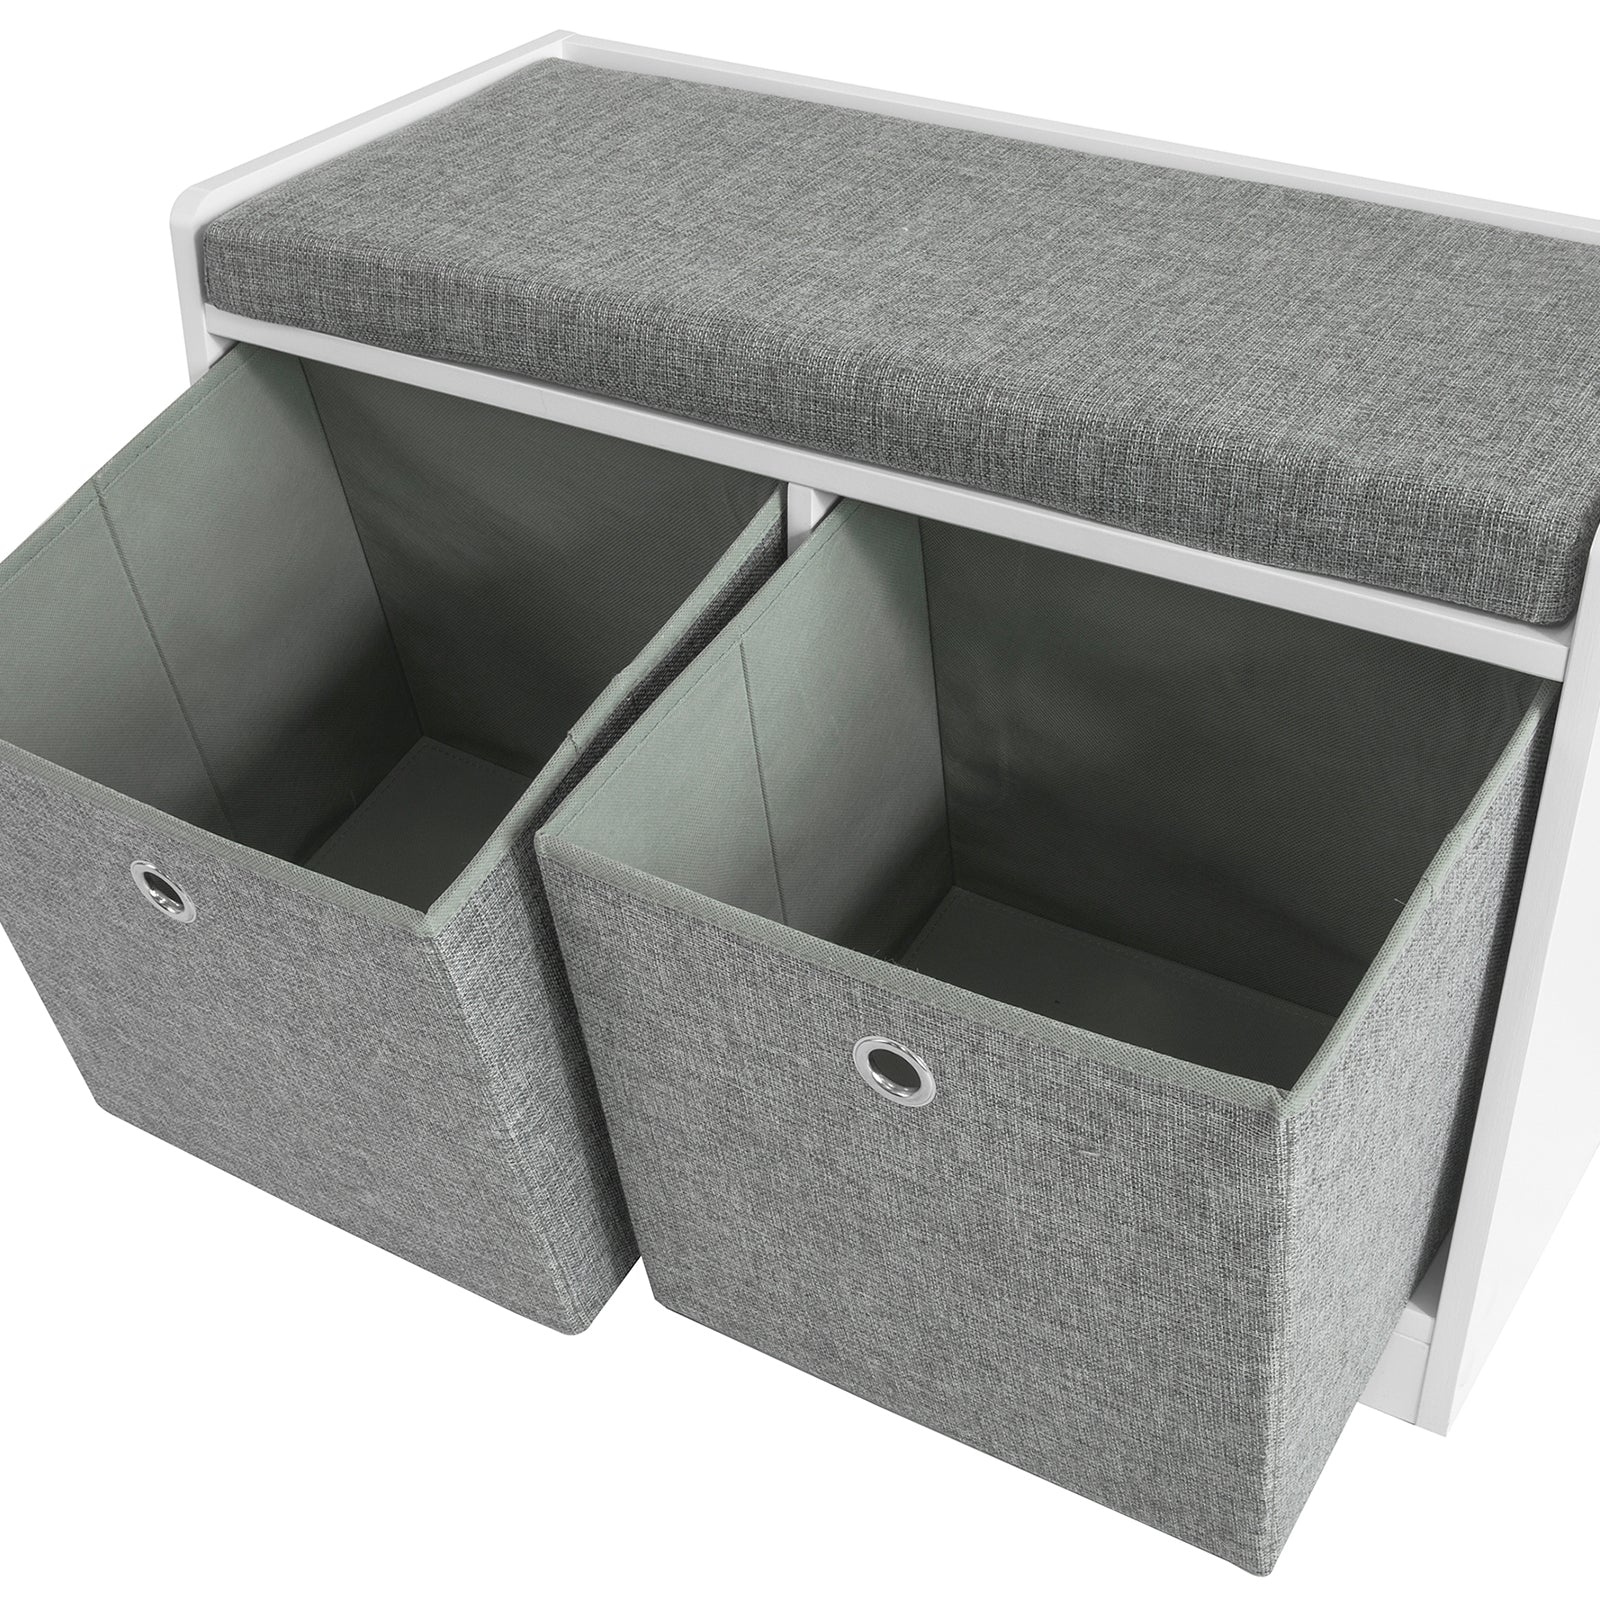 SoBuy FSR65-K-DG, 2 Baskets Hallway Bedroom Storage Bench, Shoe Bench Shoe Rack Shoe Cabinet with Seat Cushion